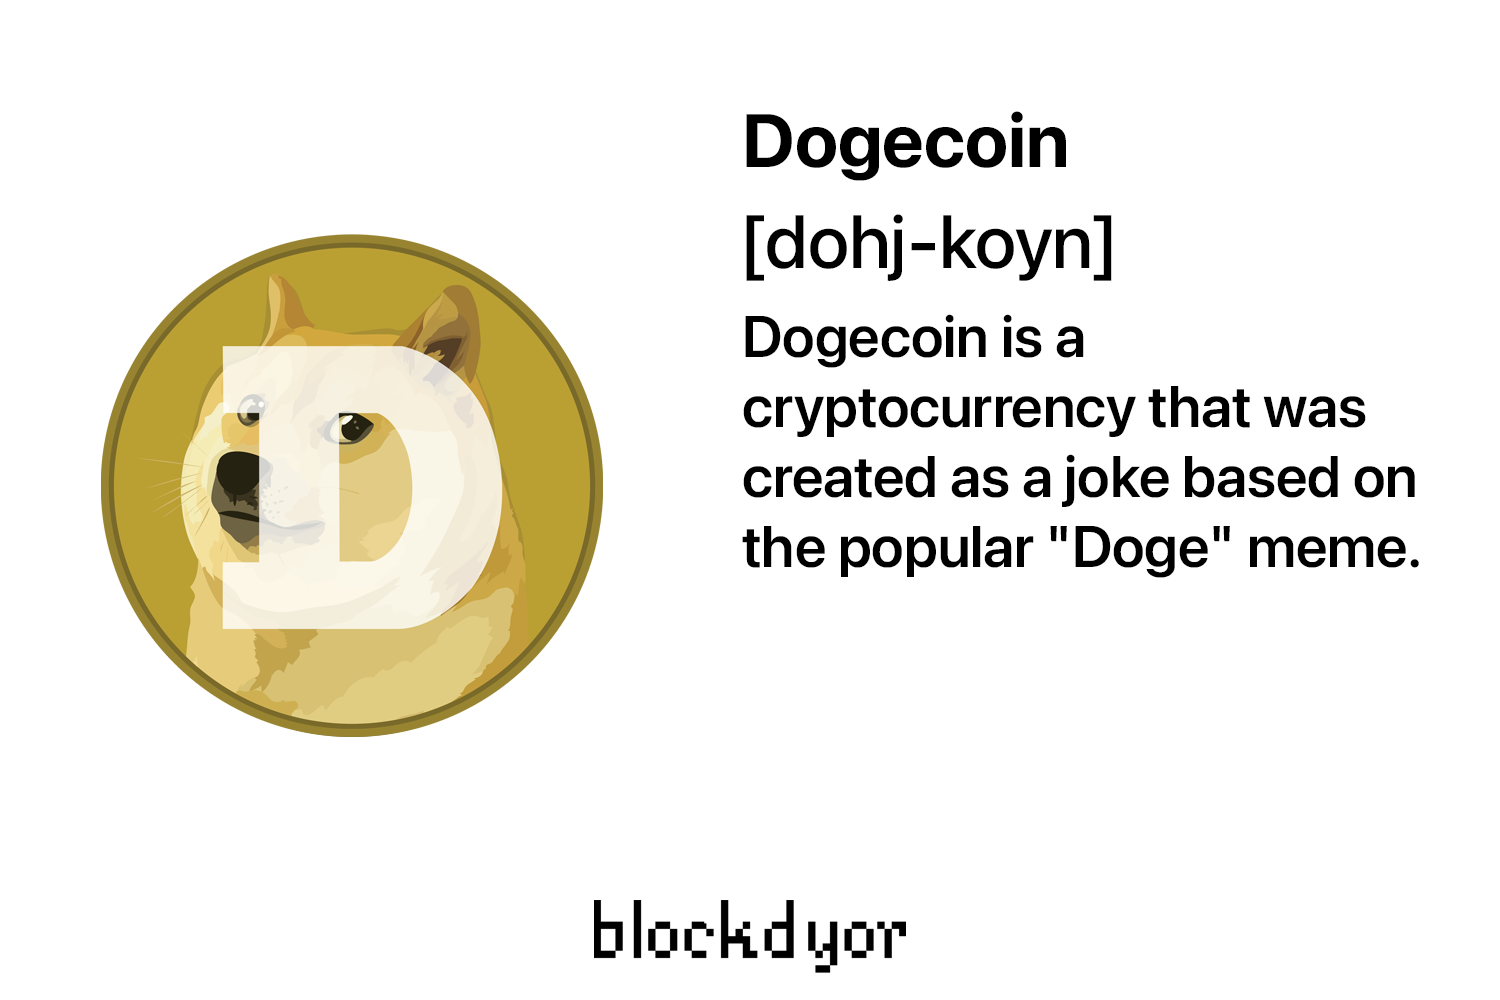 Dogecoin definition